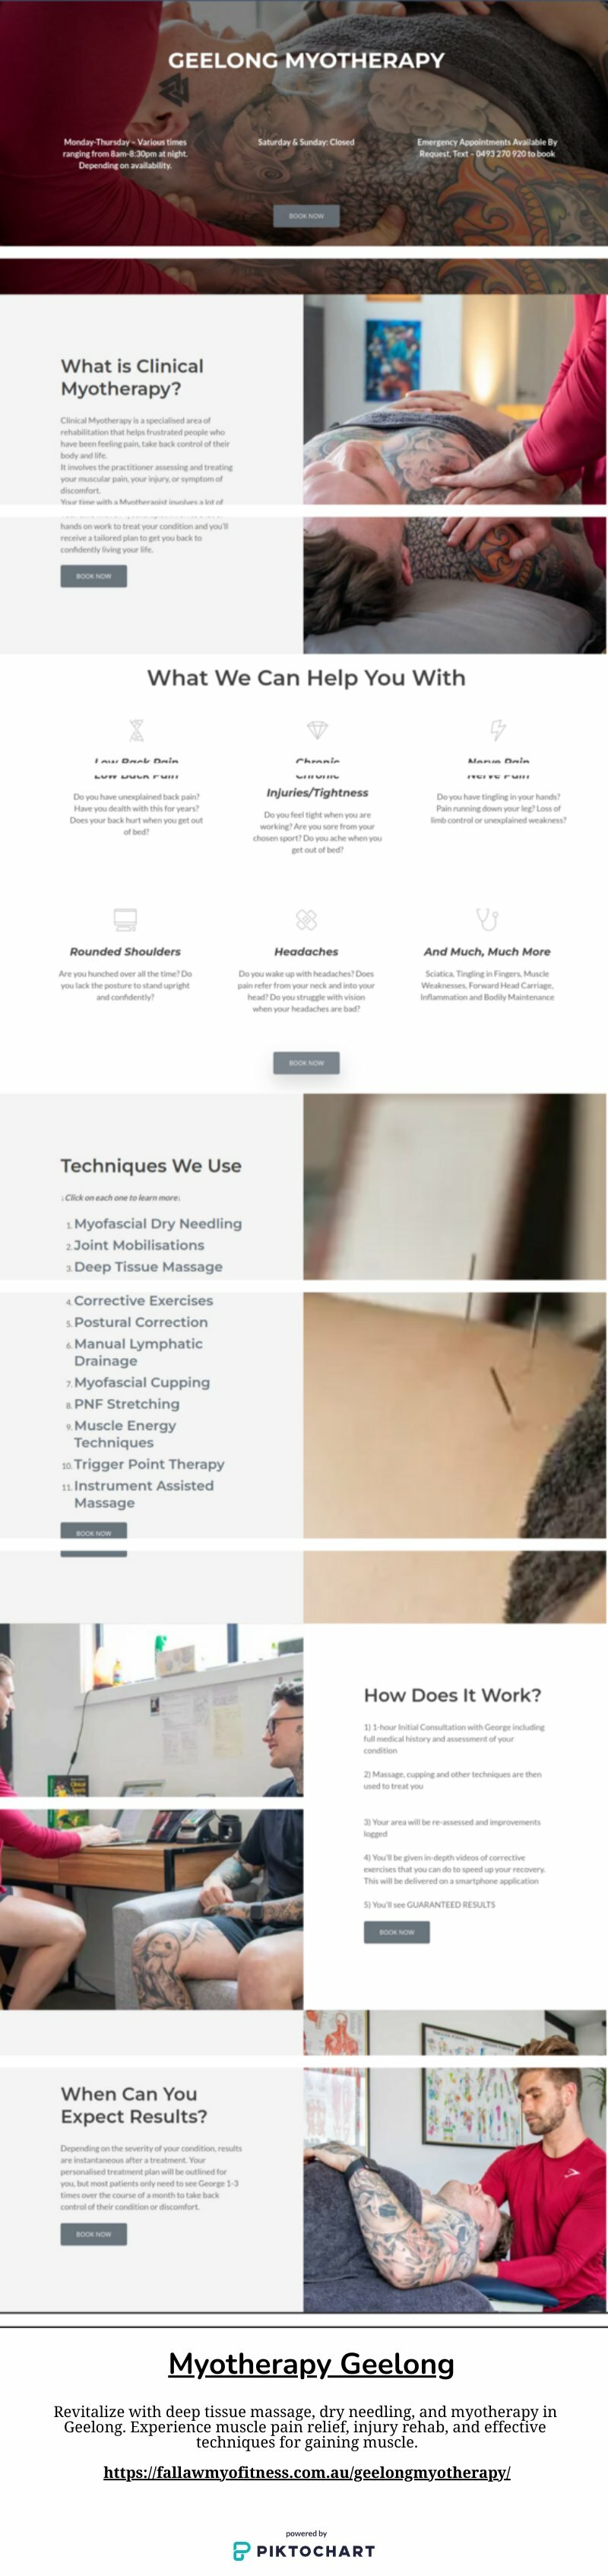 Myotherapy Geelong | Piktochart Visual Editor